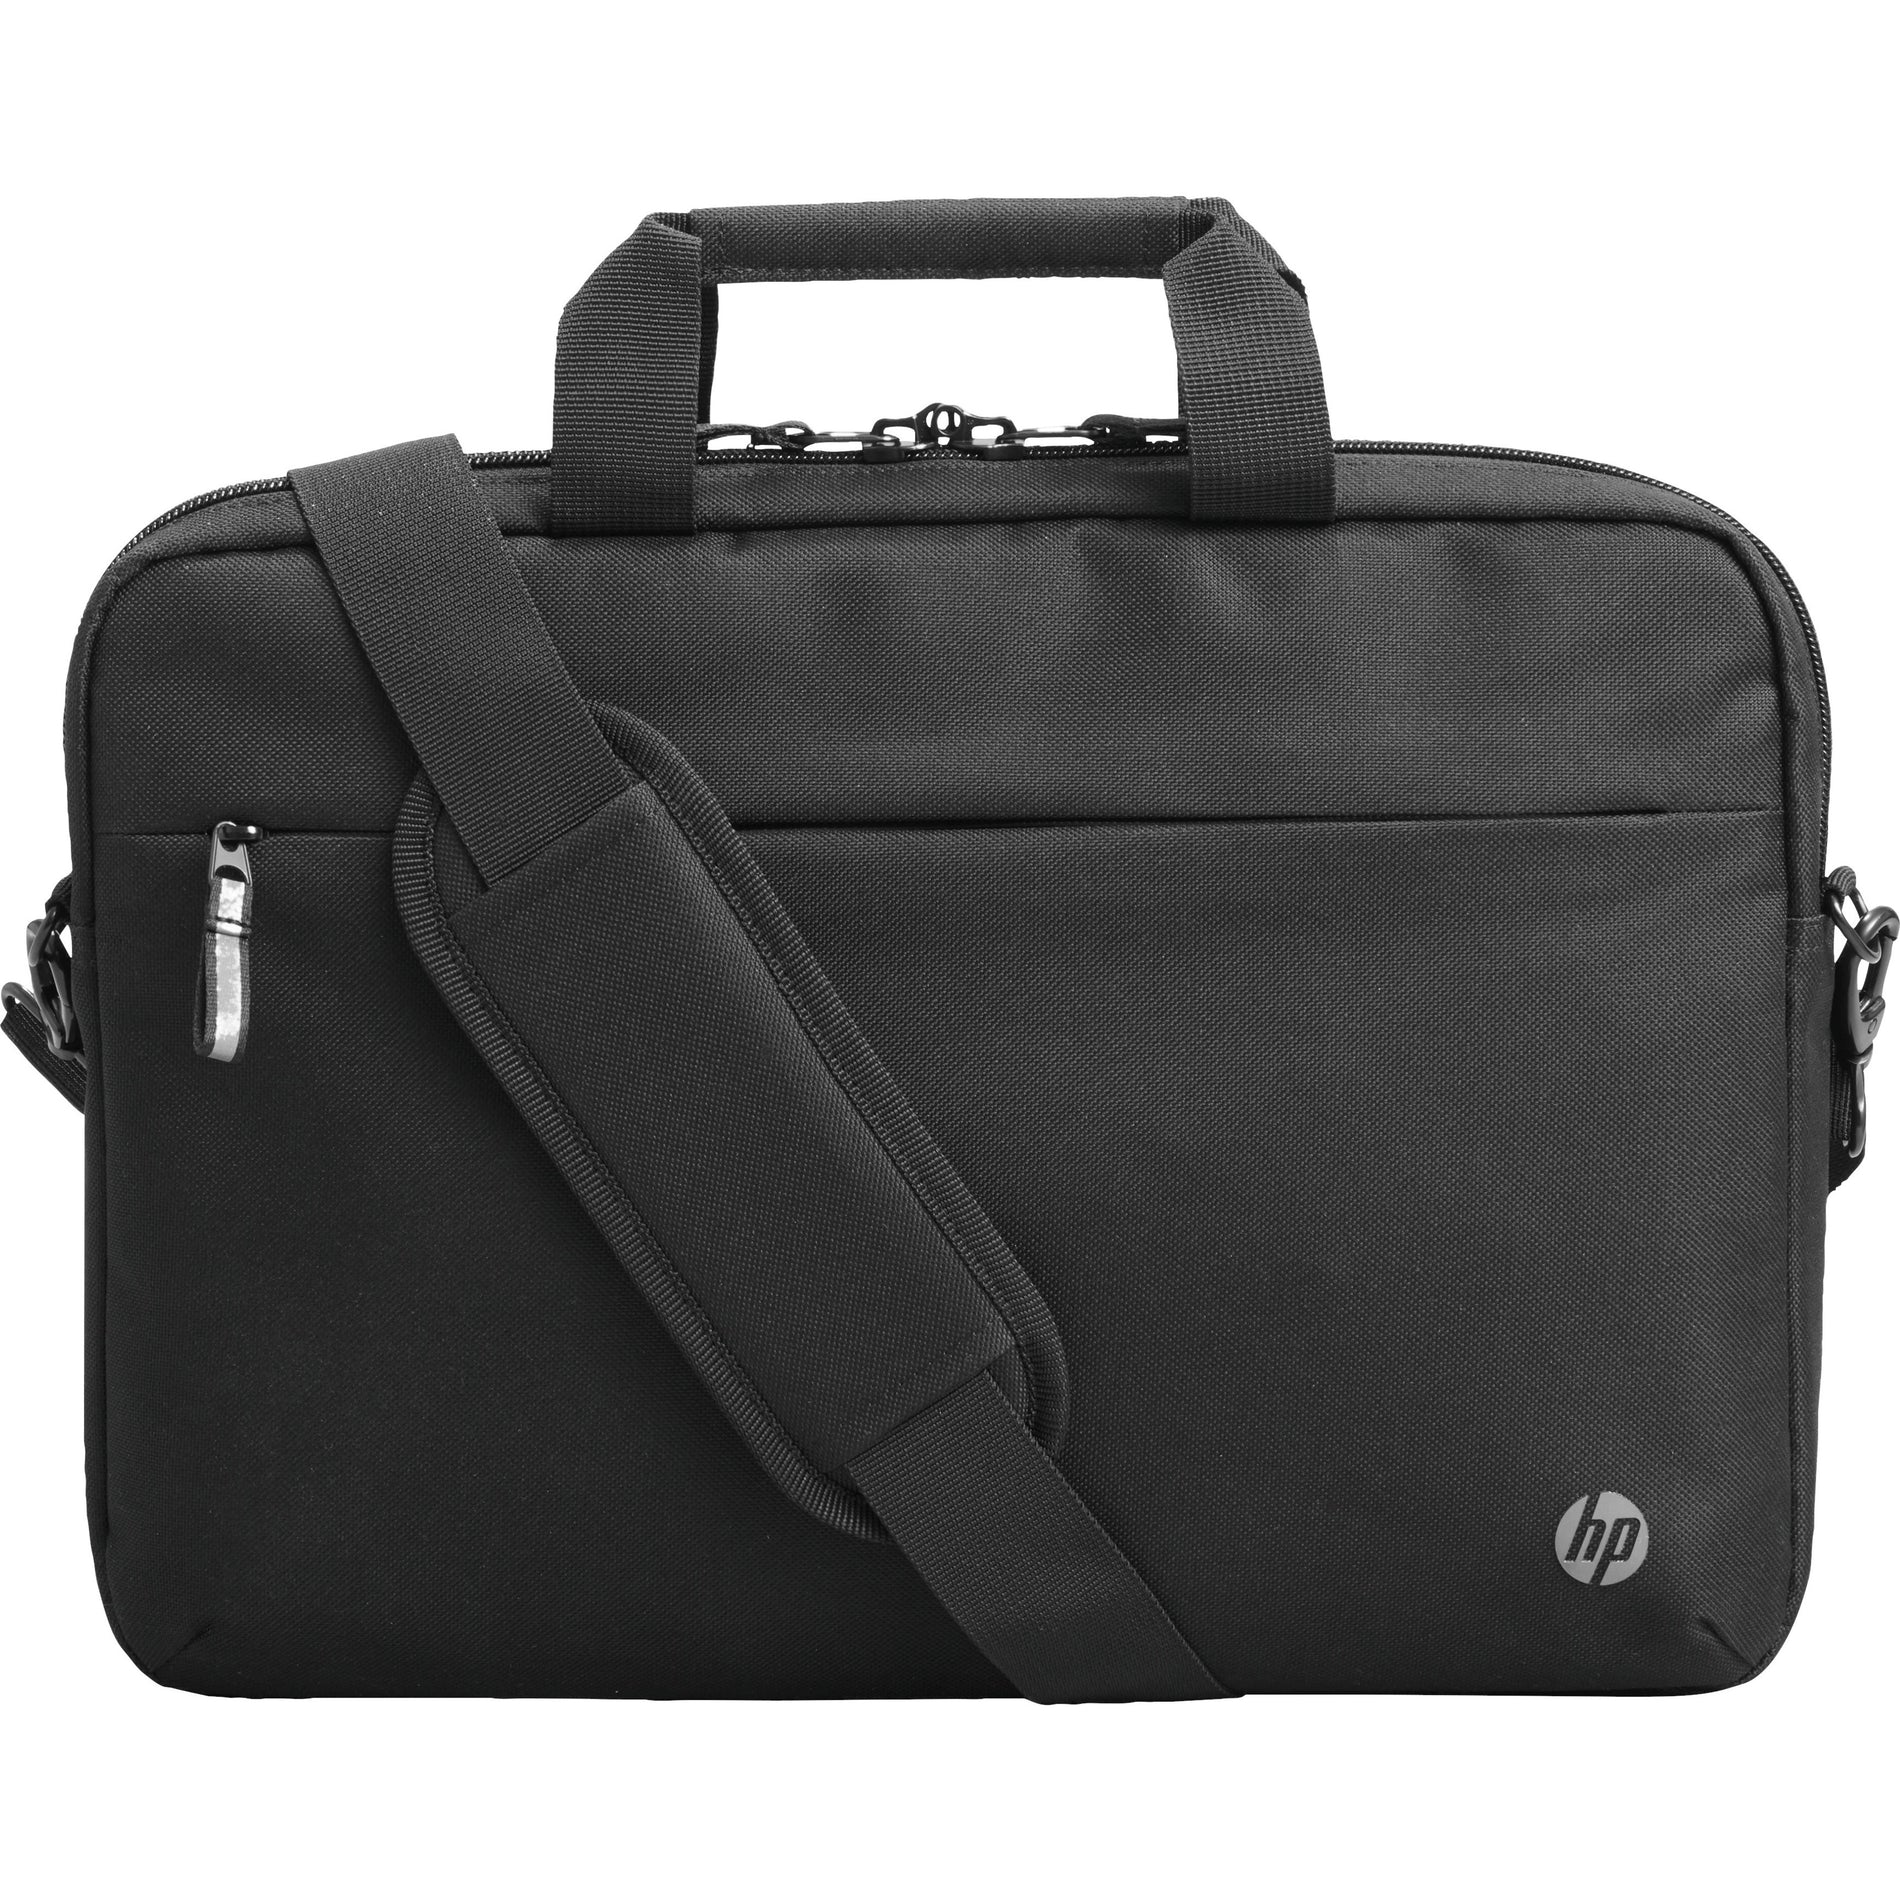 HP 3E5F9UT Renew Business 14.1-inch Laptop Bag, Water Resistant, 8 Pockets, Black